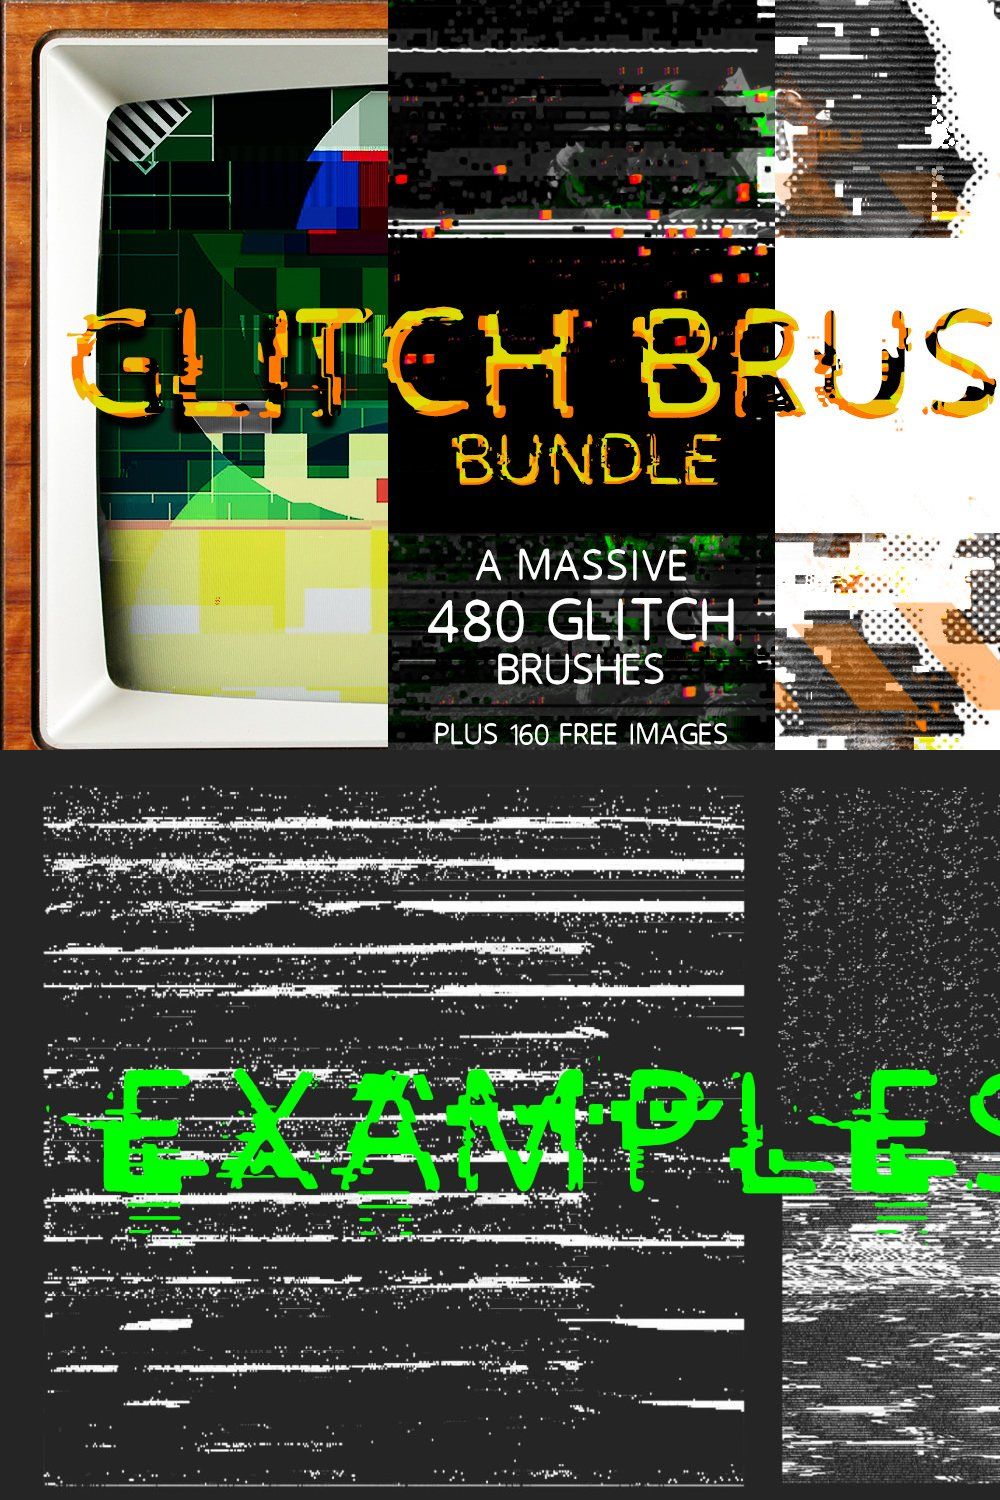 Glitch Brush Bundle pinterest preview image.